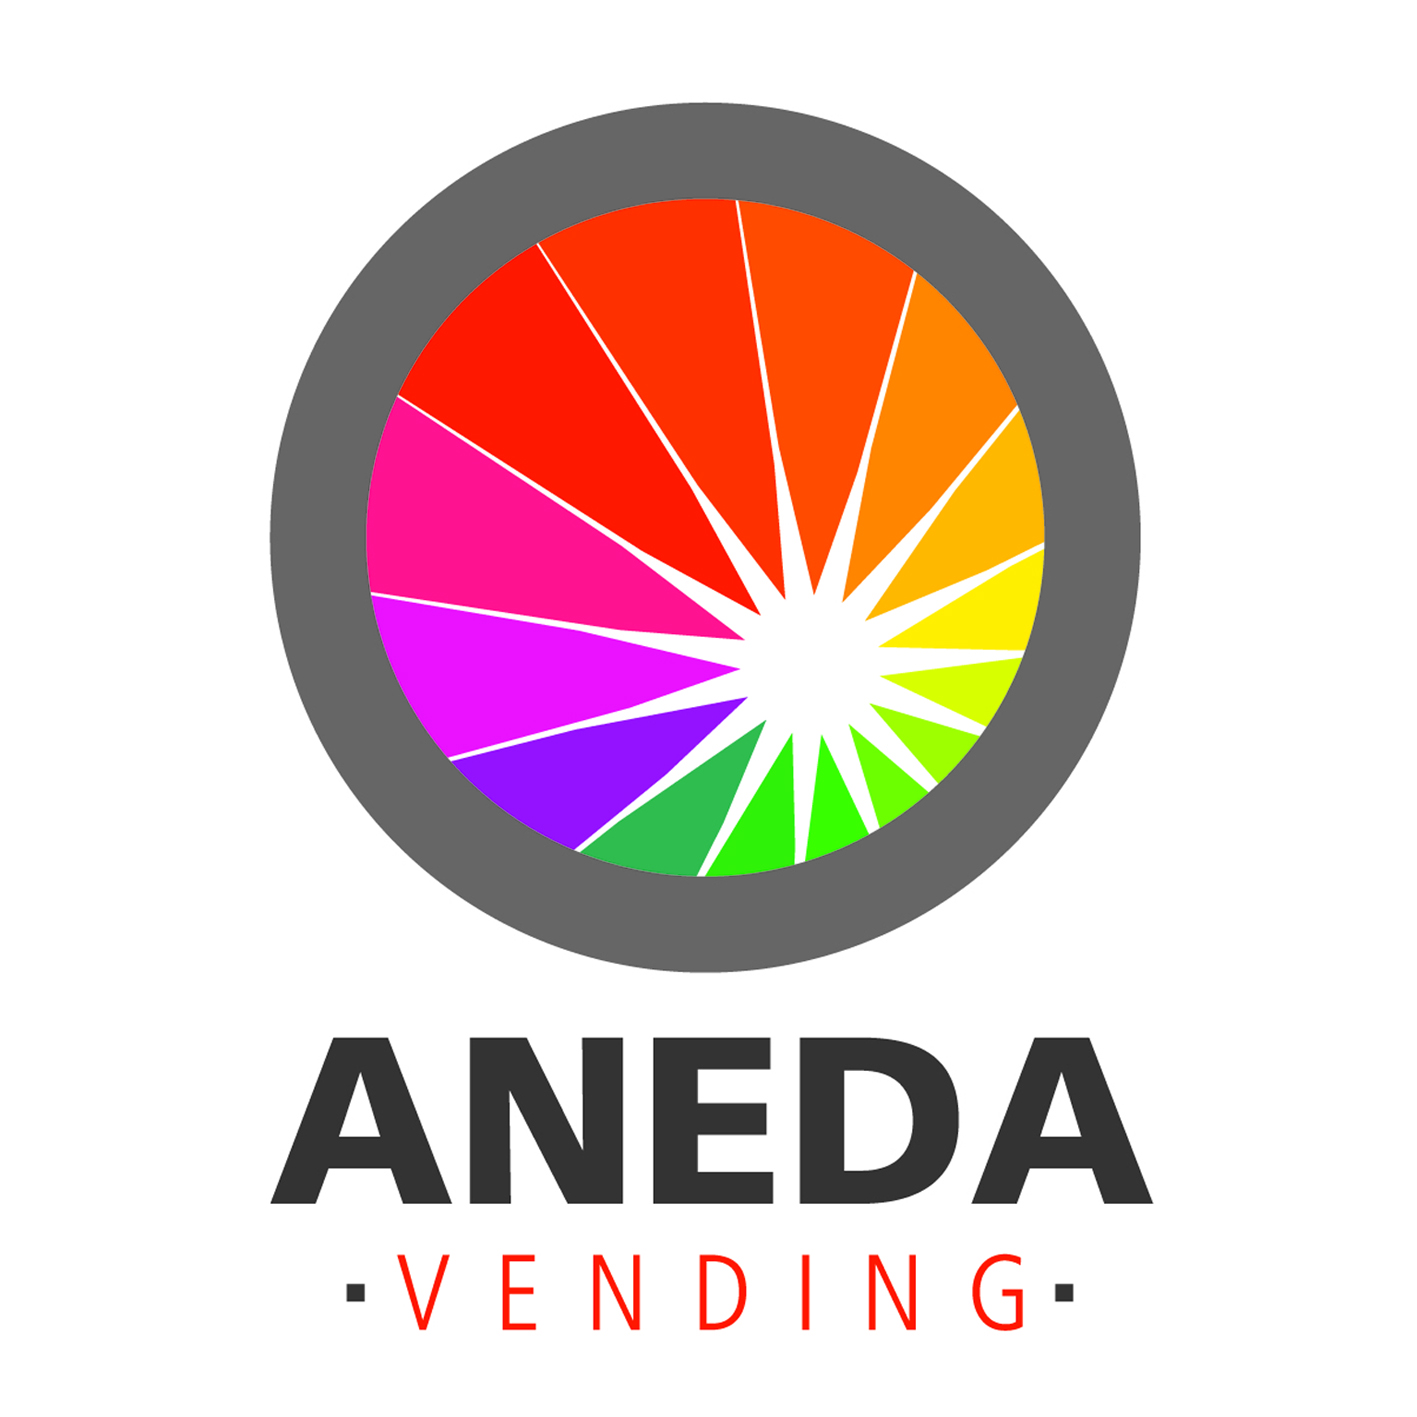 www.aneda.org